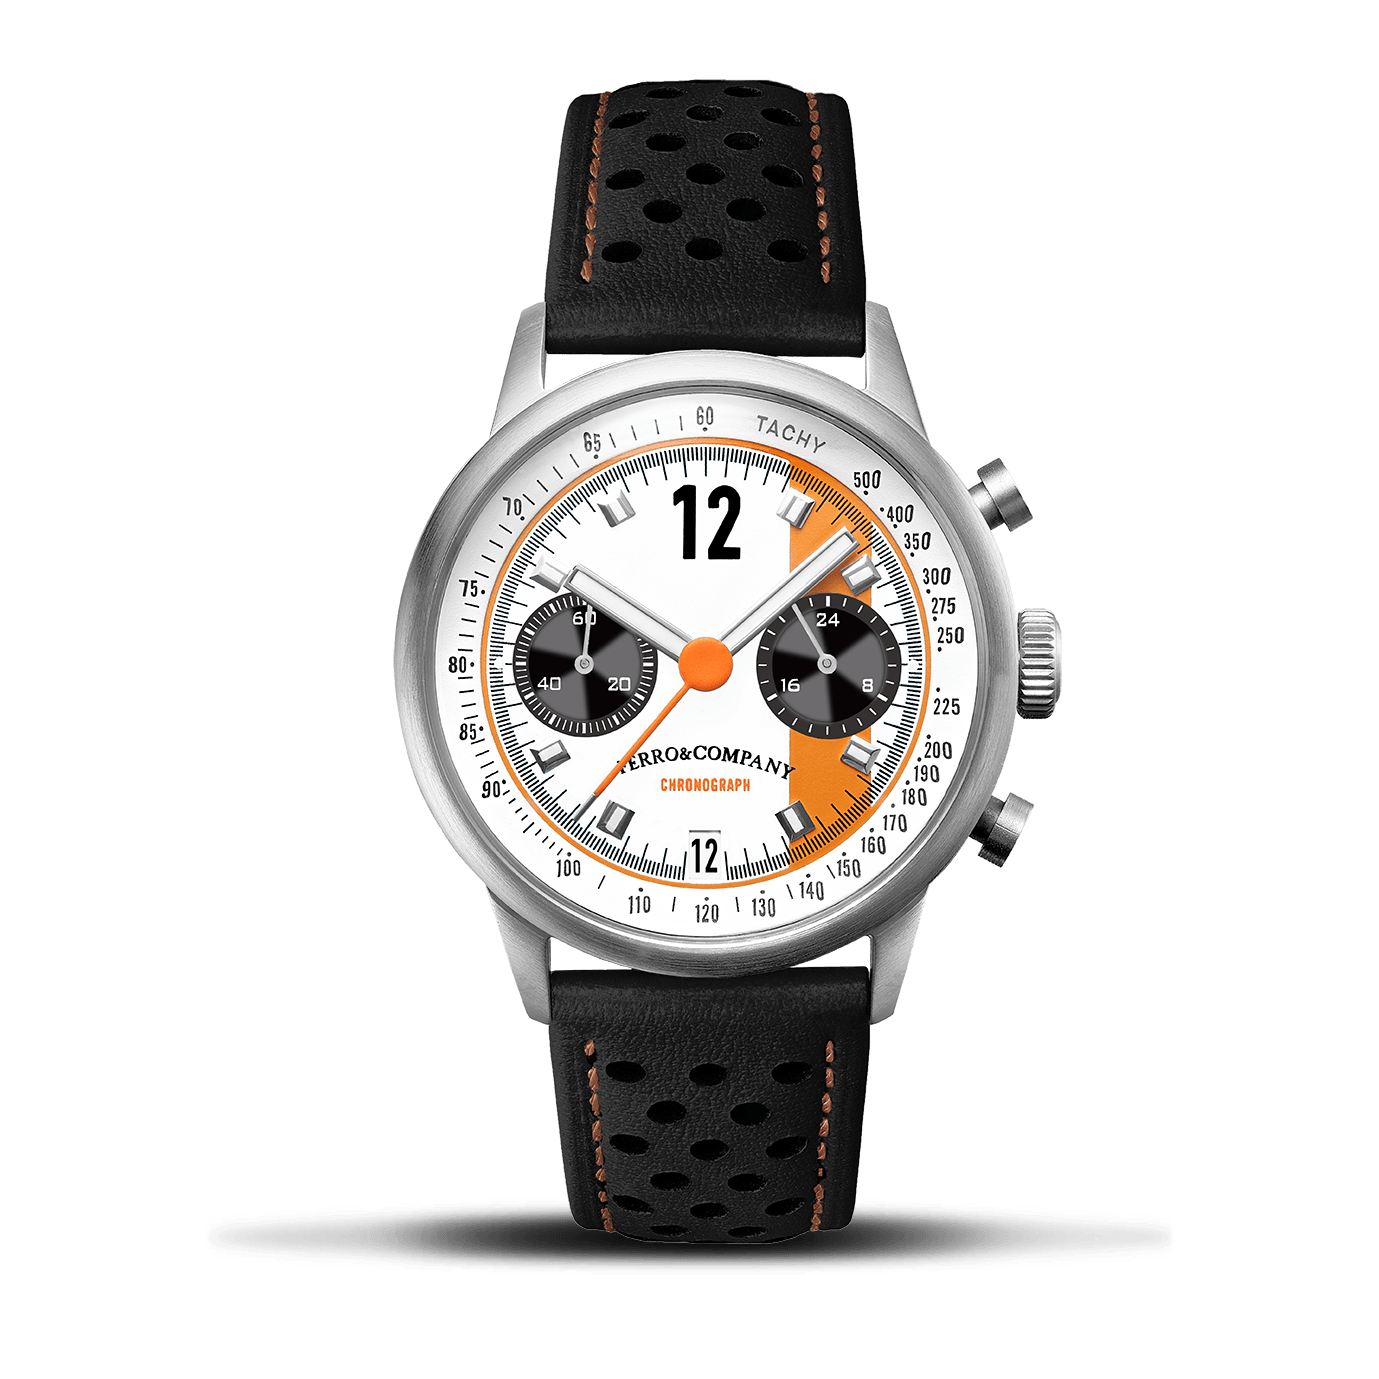 Race Master Chronograph White - Ferro & Company Watches